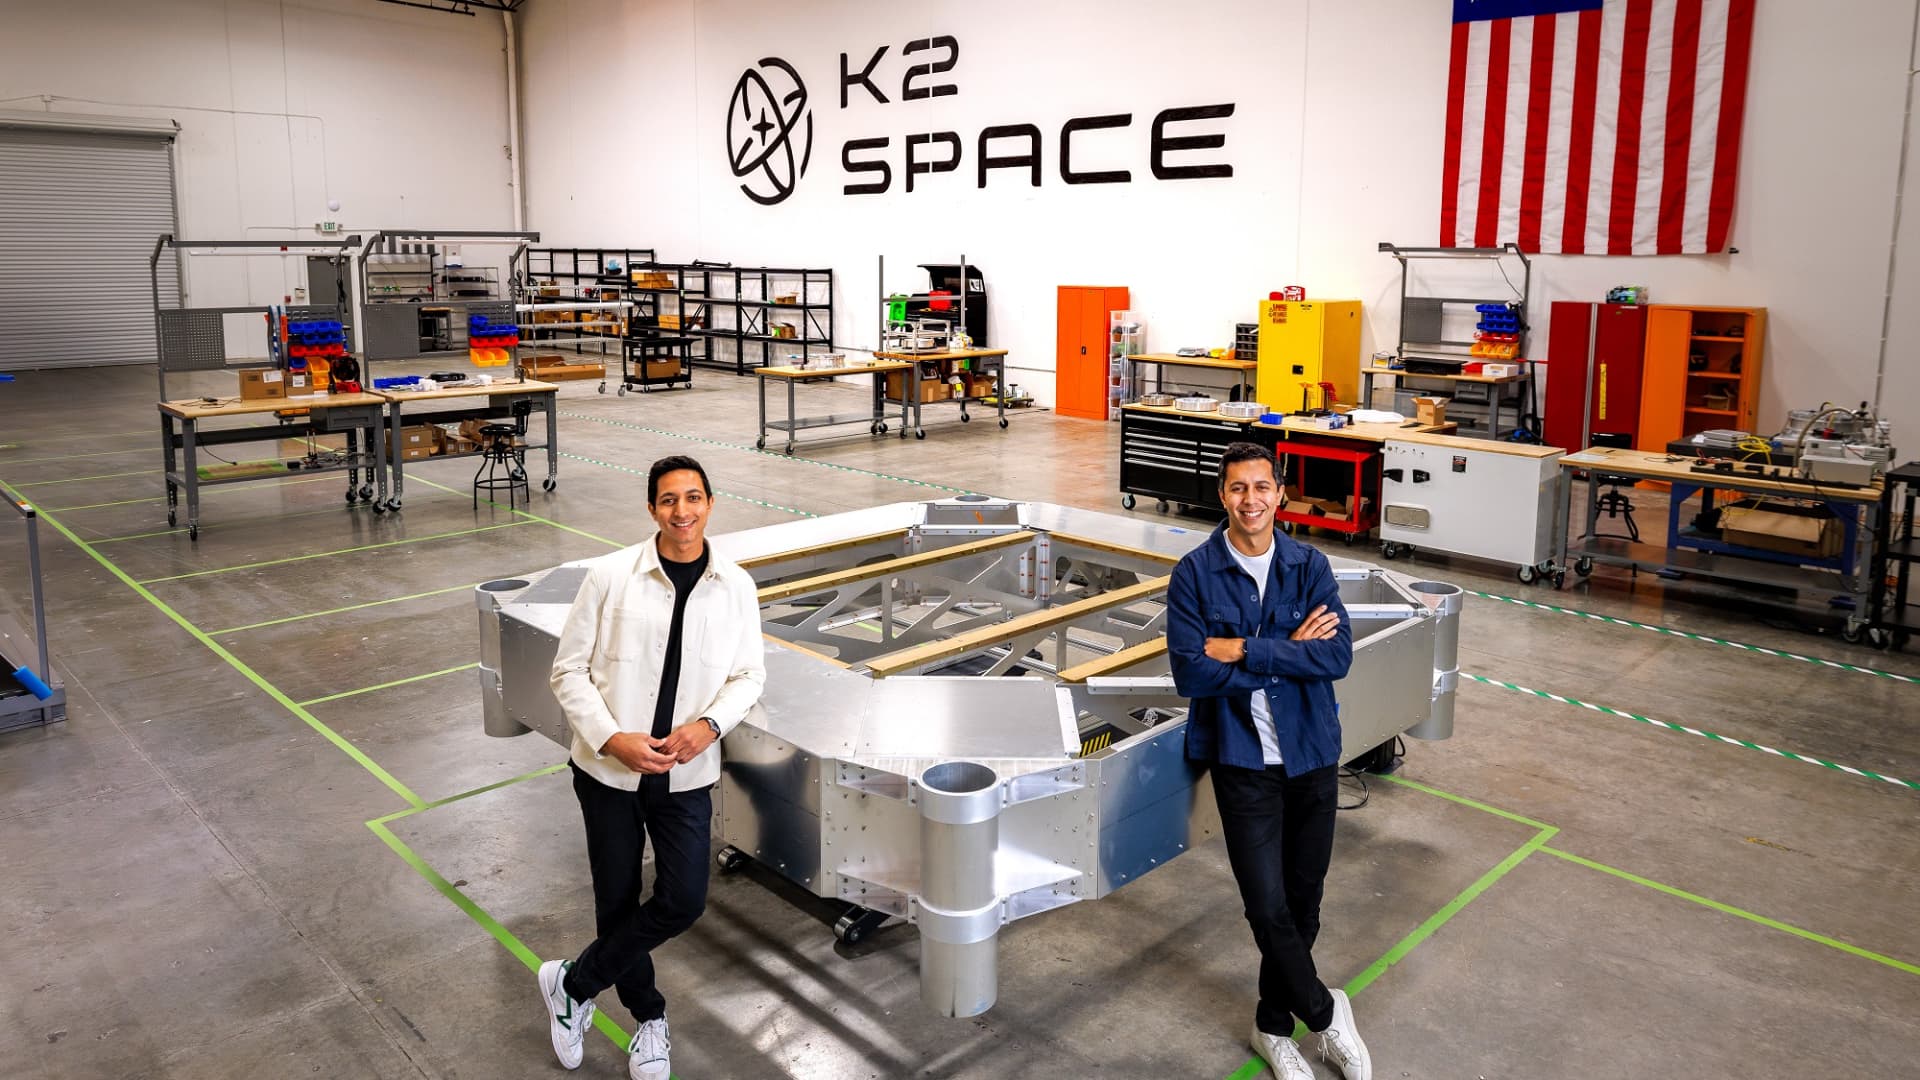 Startup K2 Space raises $50 million to build monster satellites